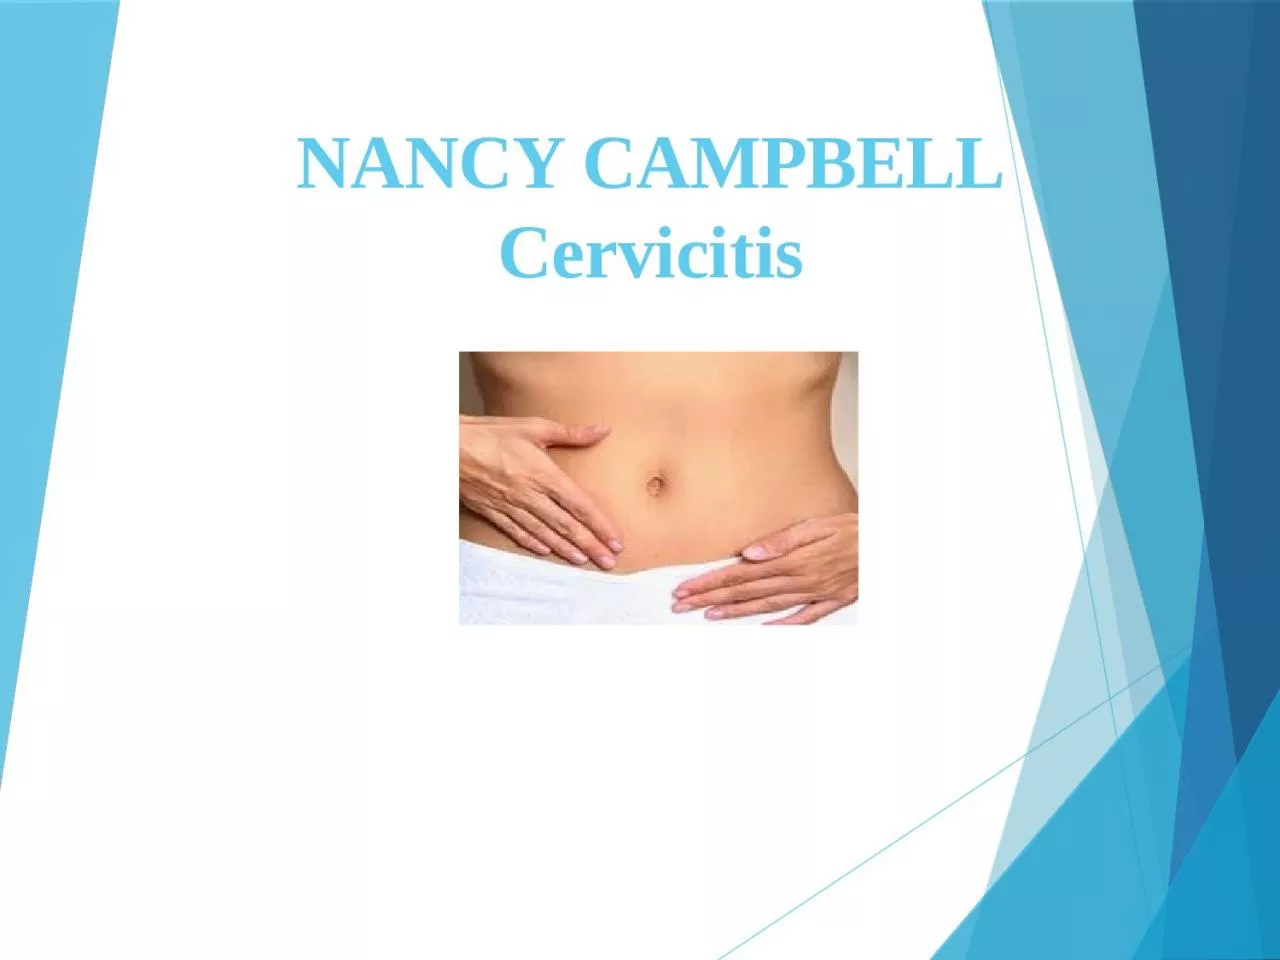 NANCY CAMPBELL Cervicitis